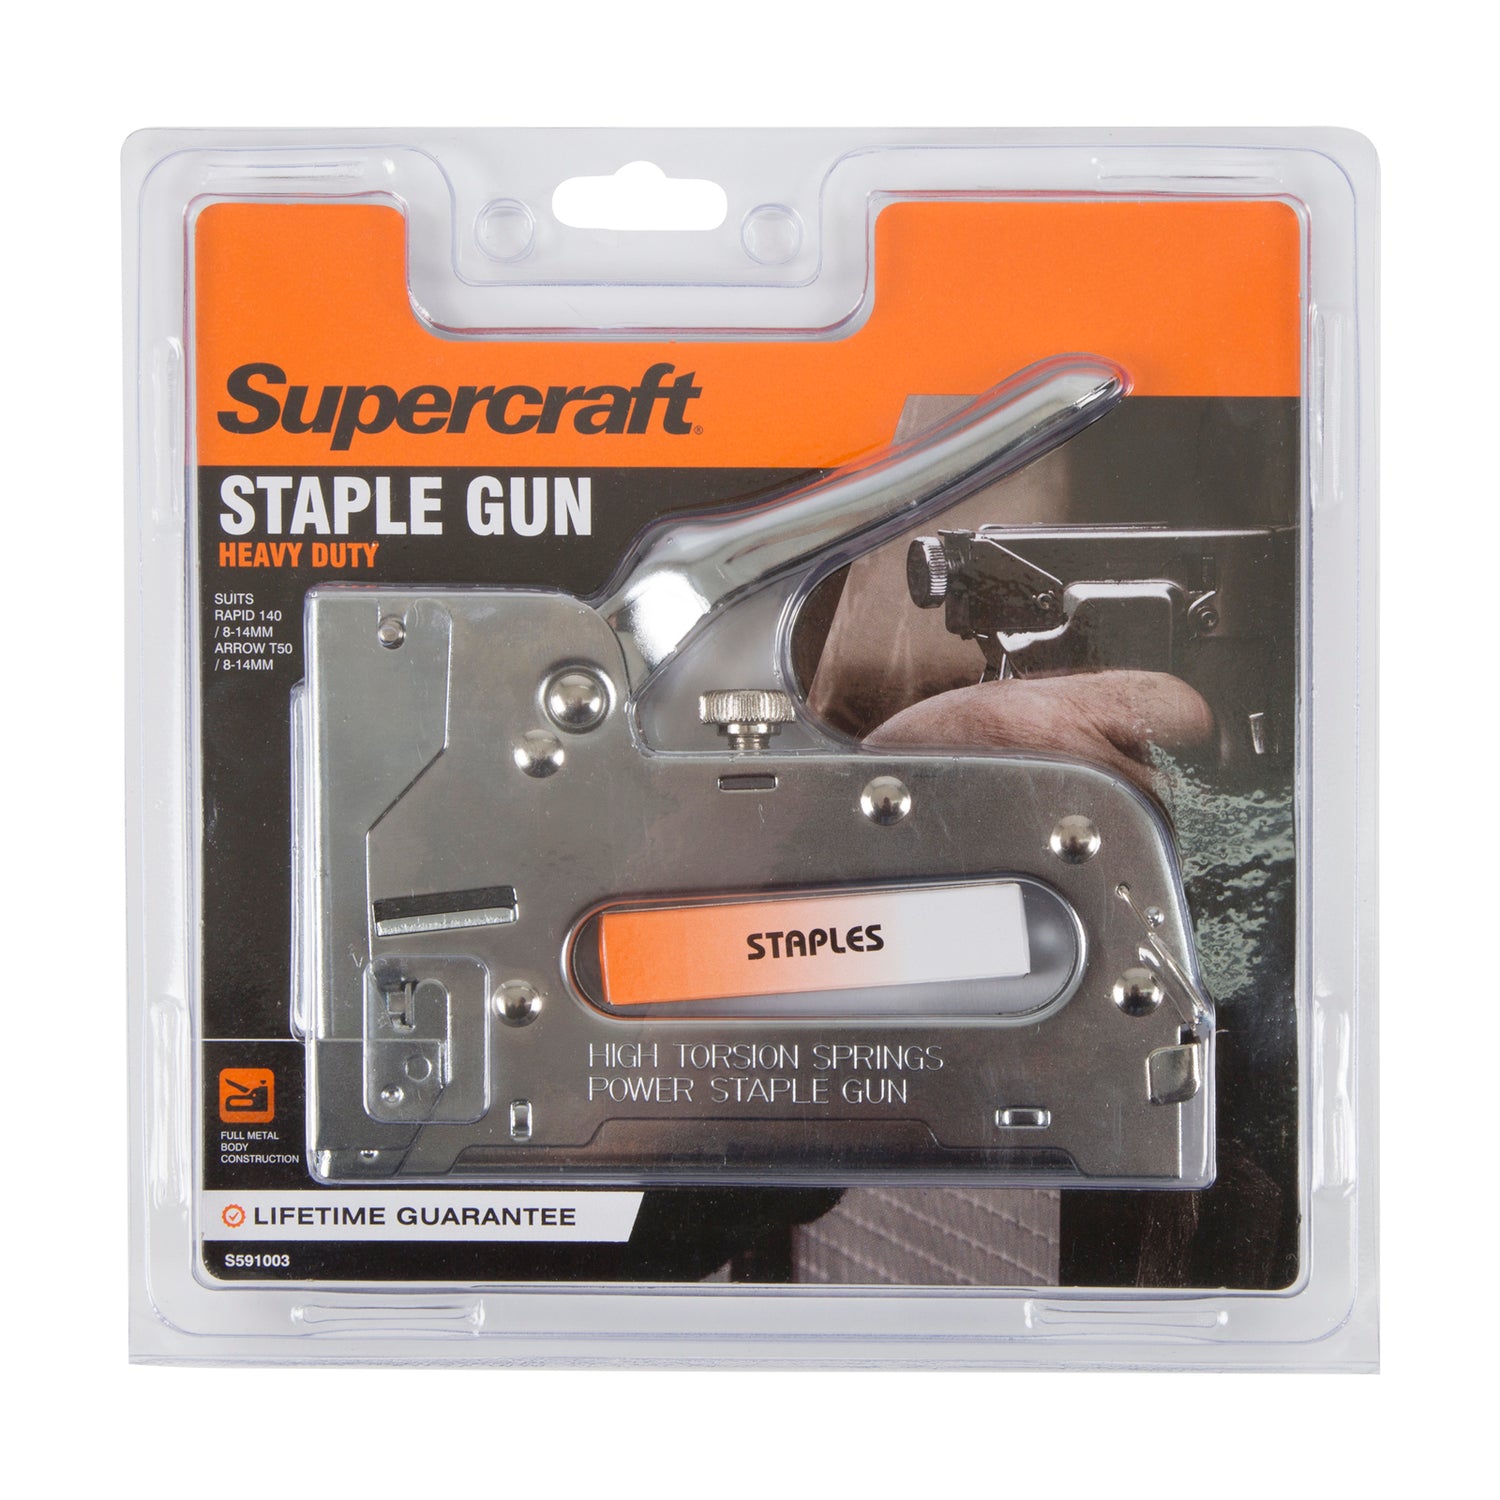 Supercraft Staple Gun Heavy Duty Metal